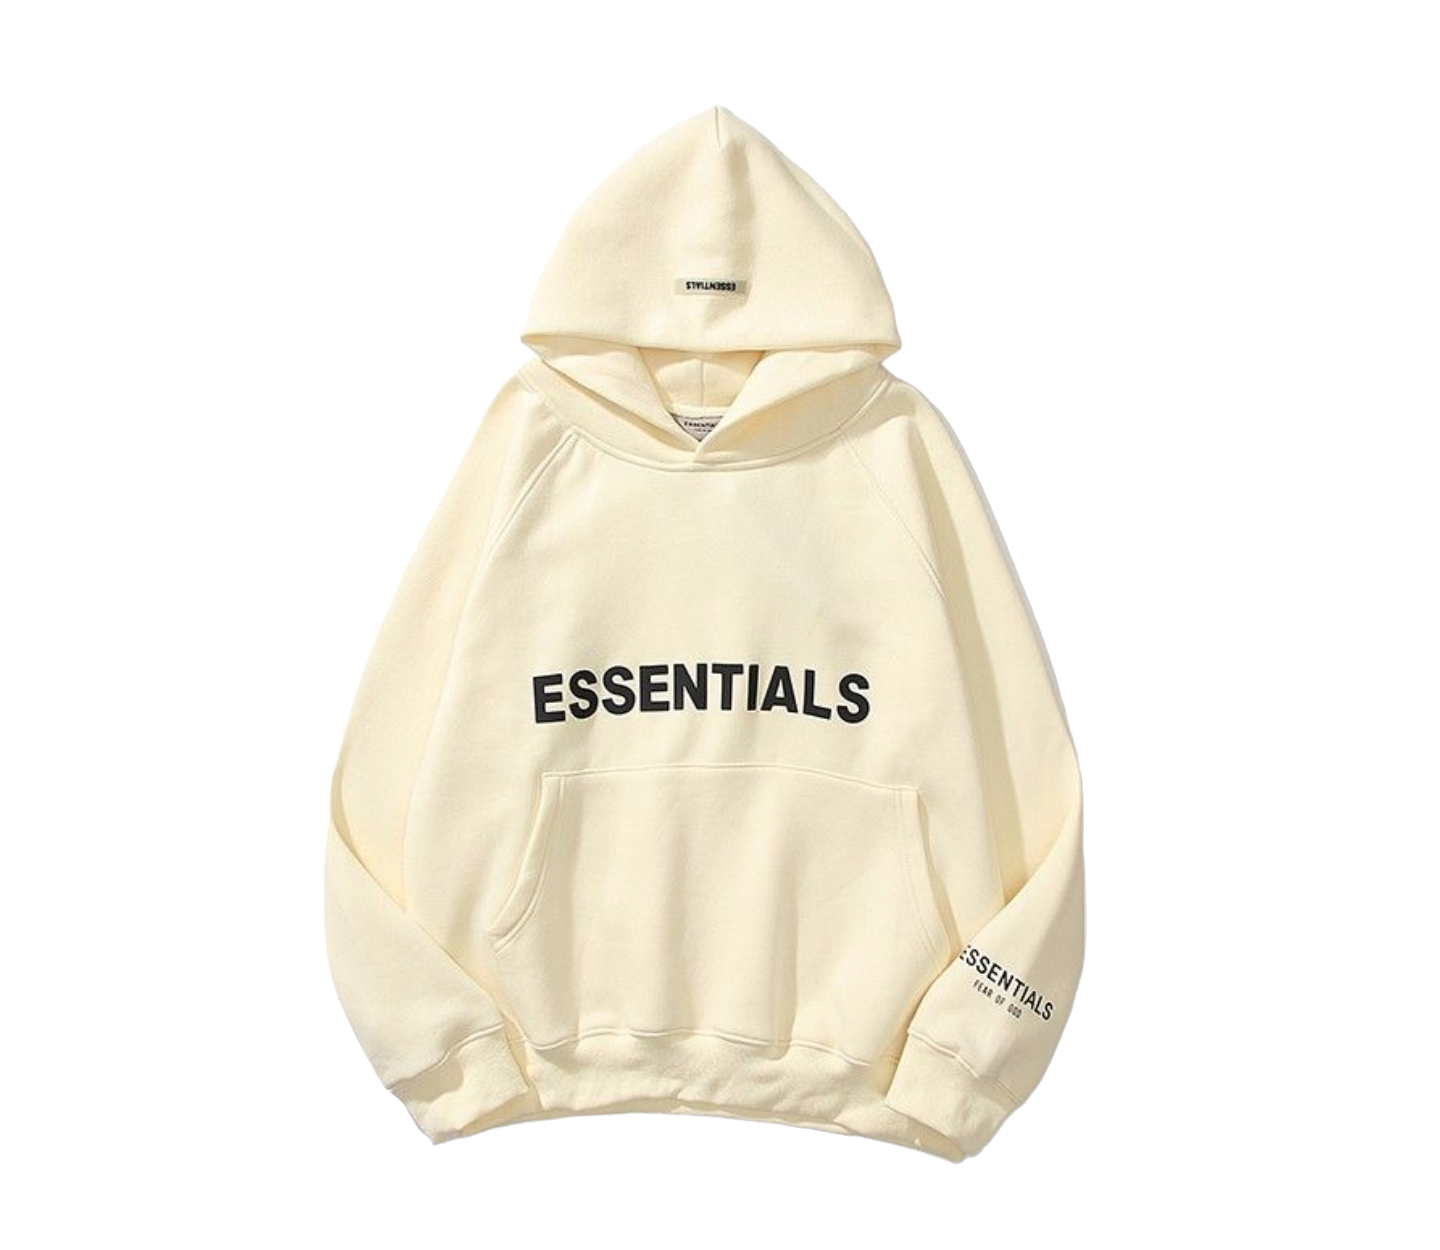 Essentials hoodie.